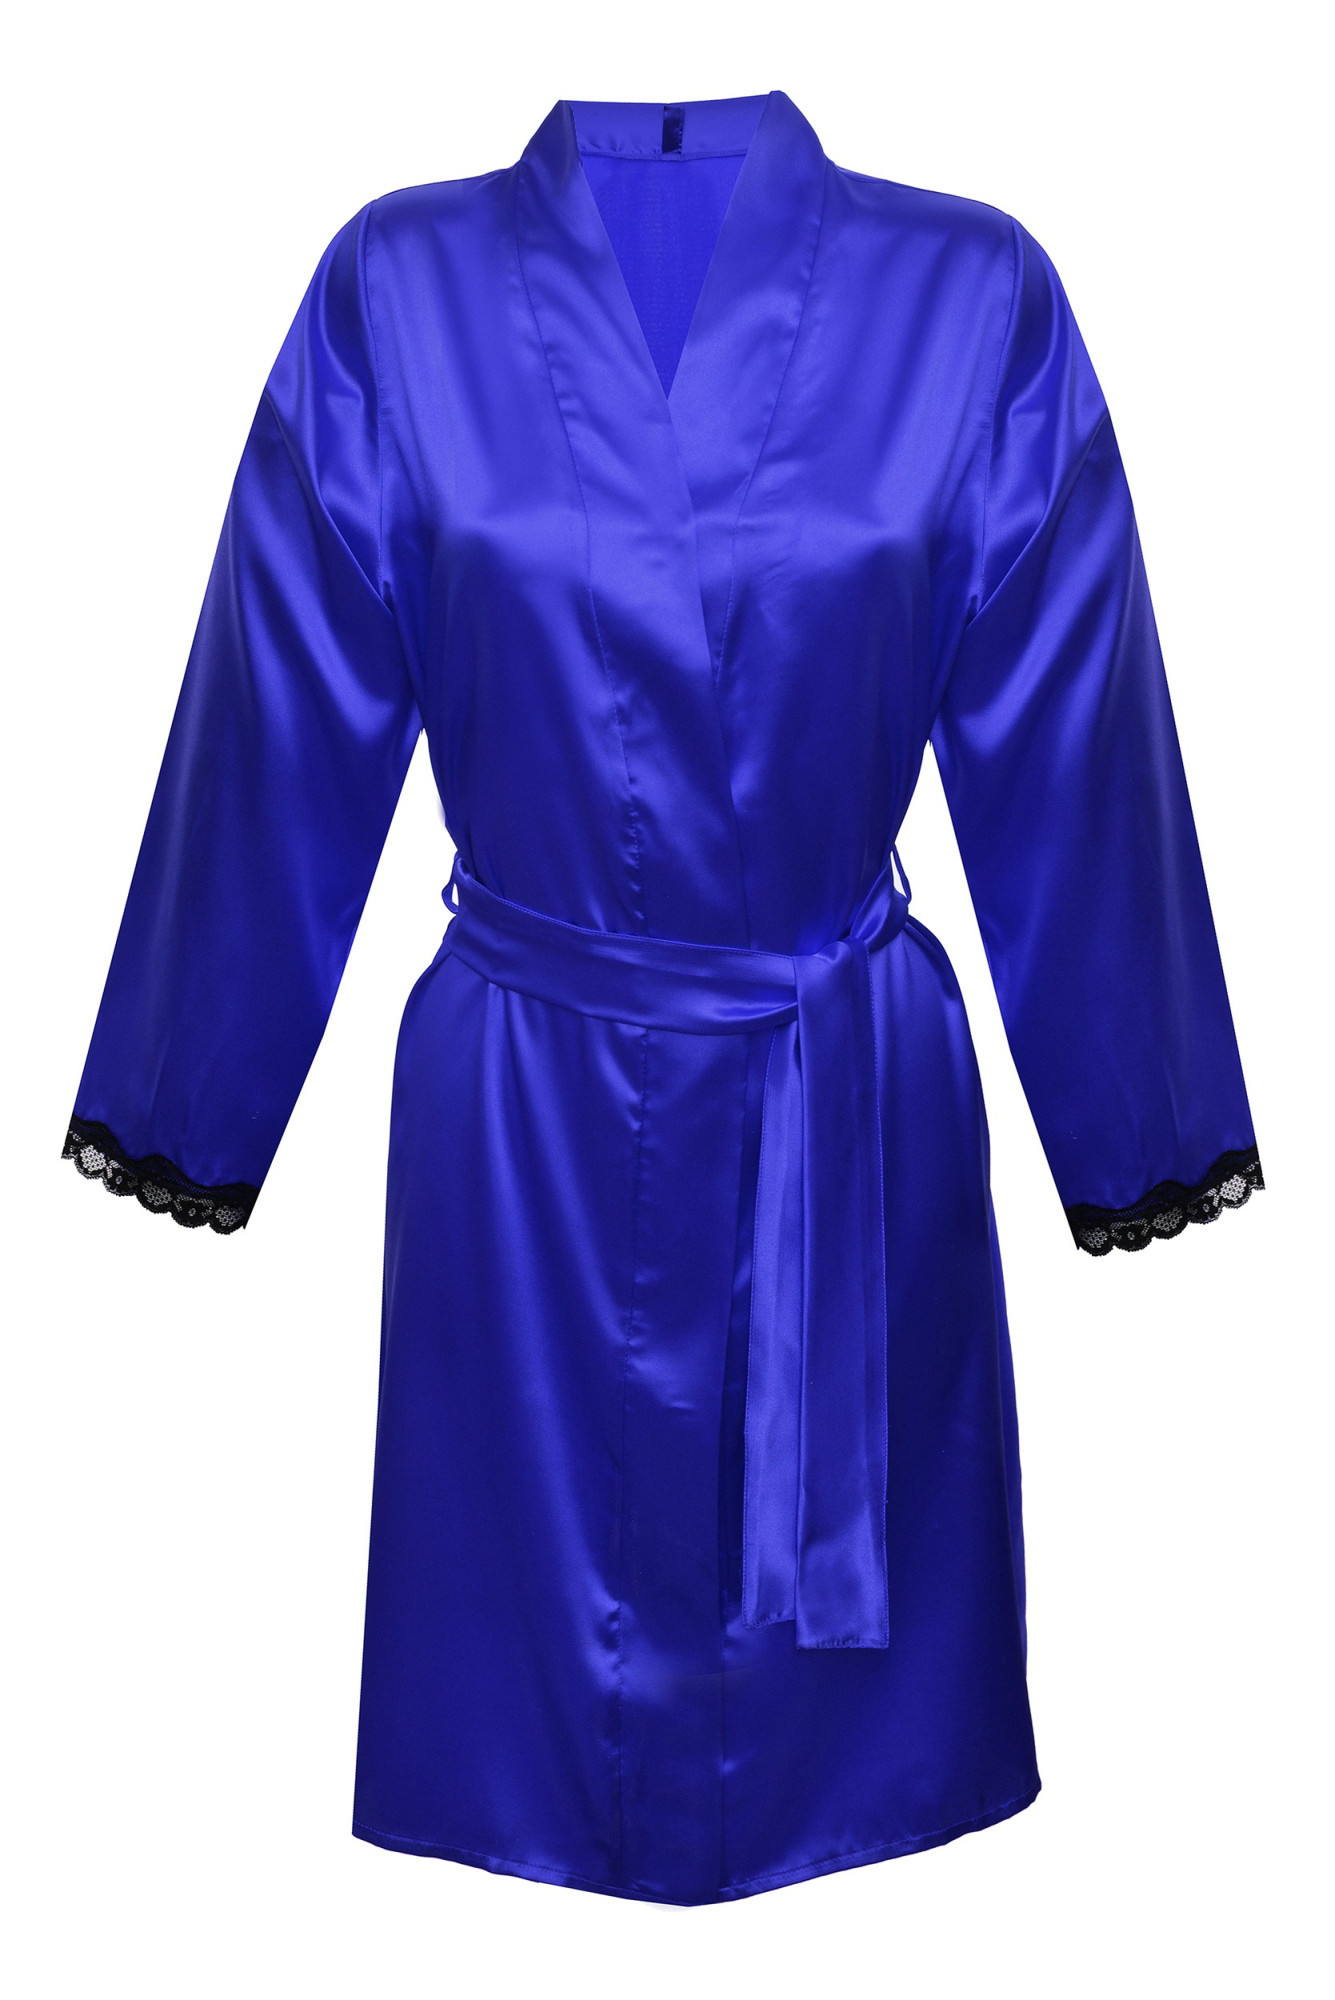 DKaren Housecoat Nancy Blue S Modrá